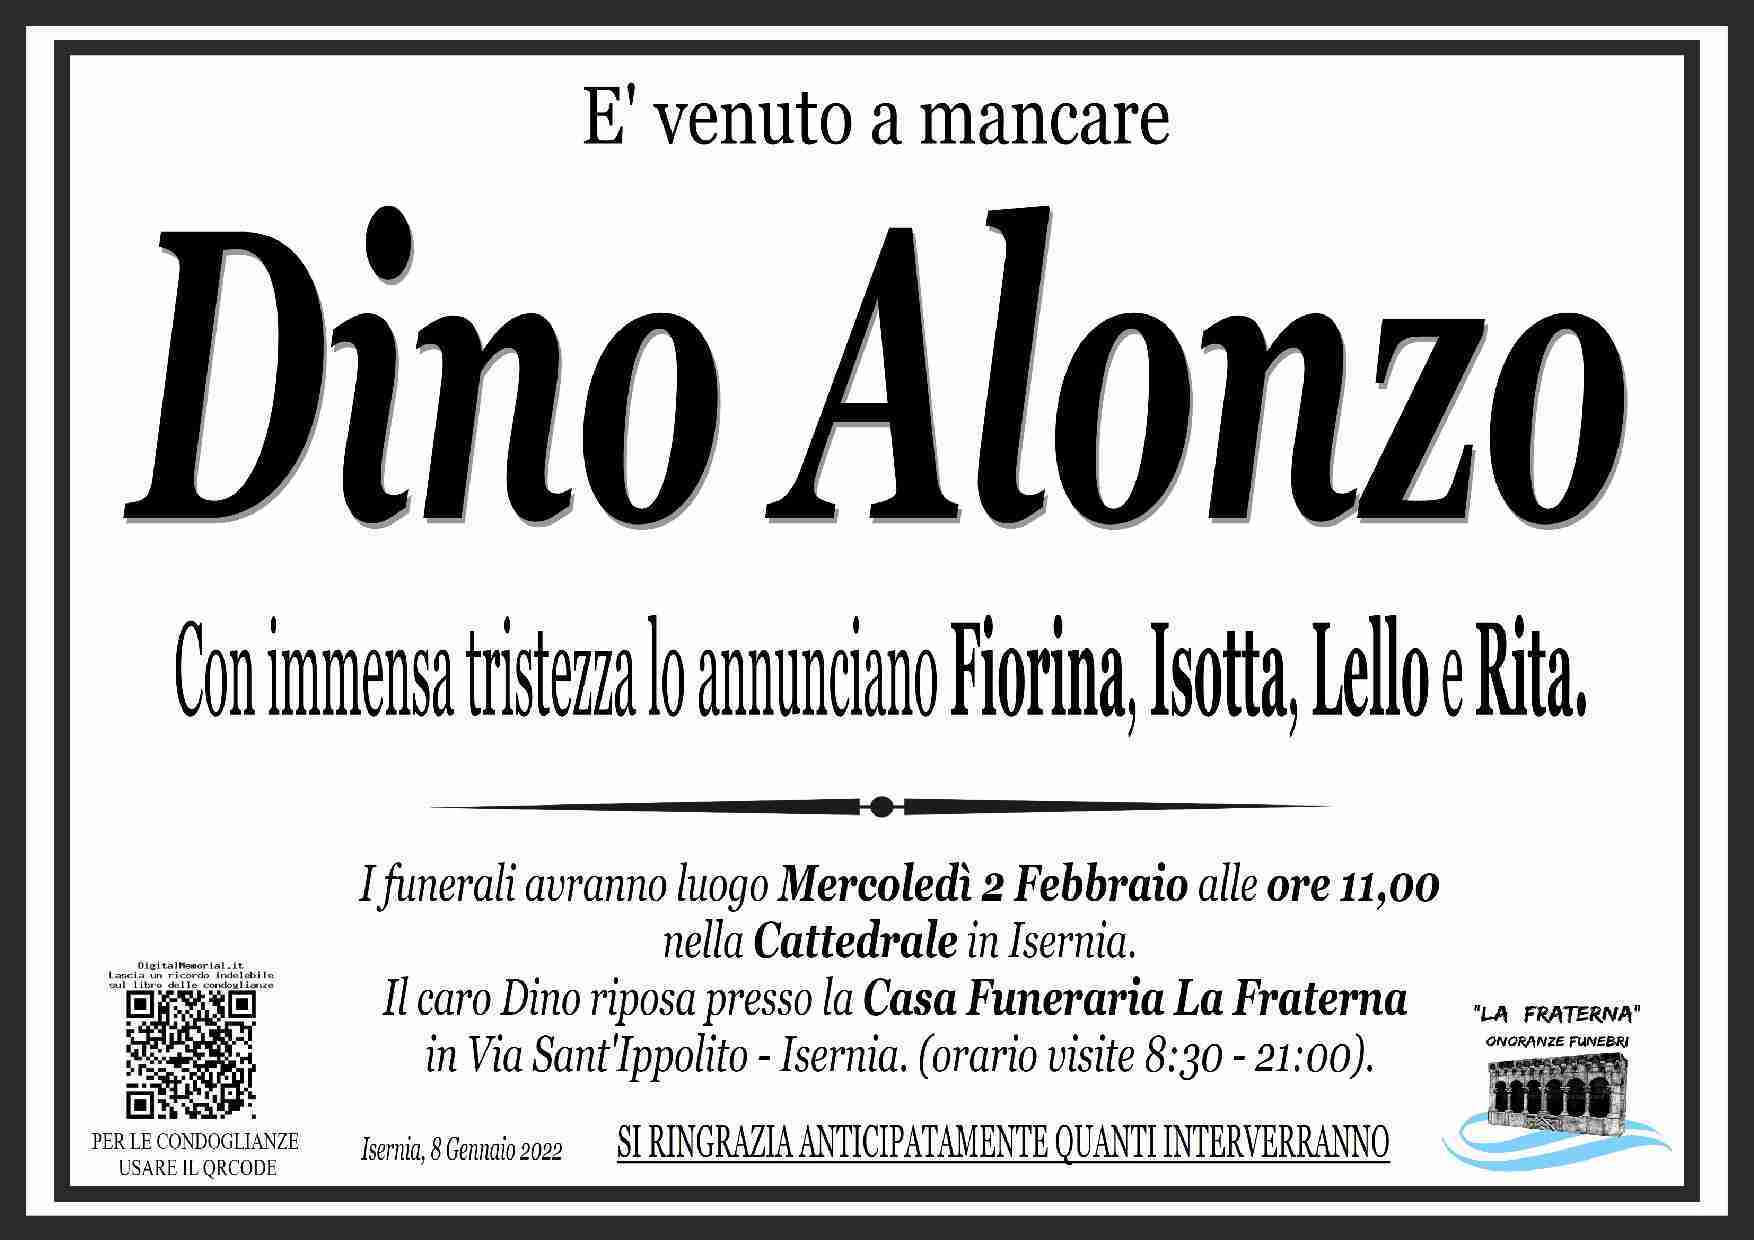 Dino Alonzo